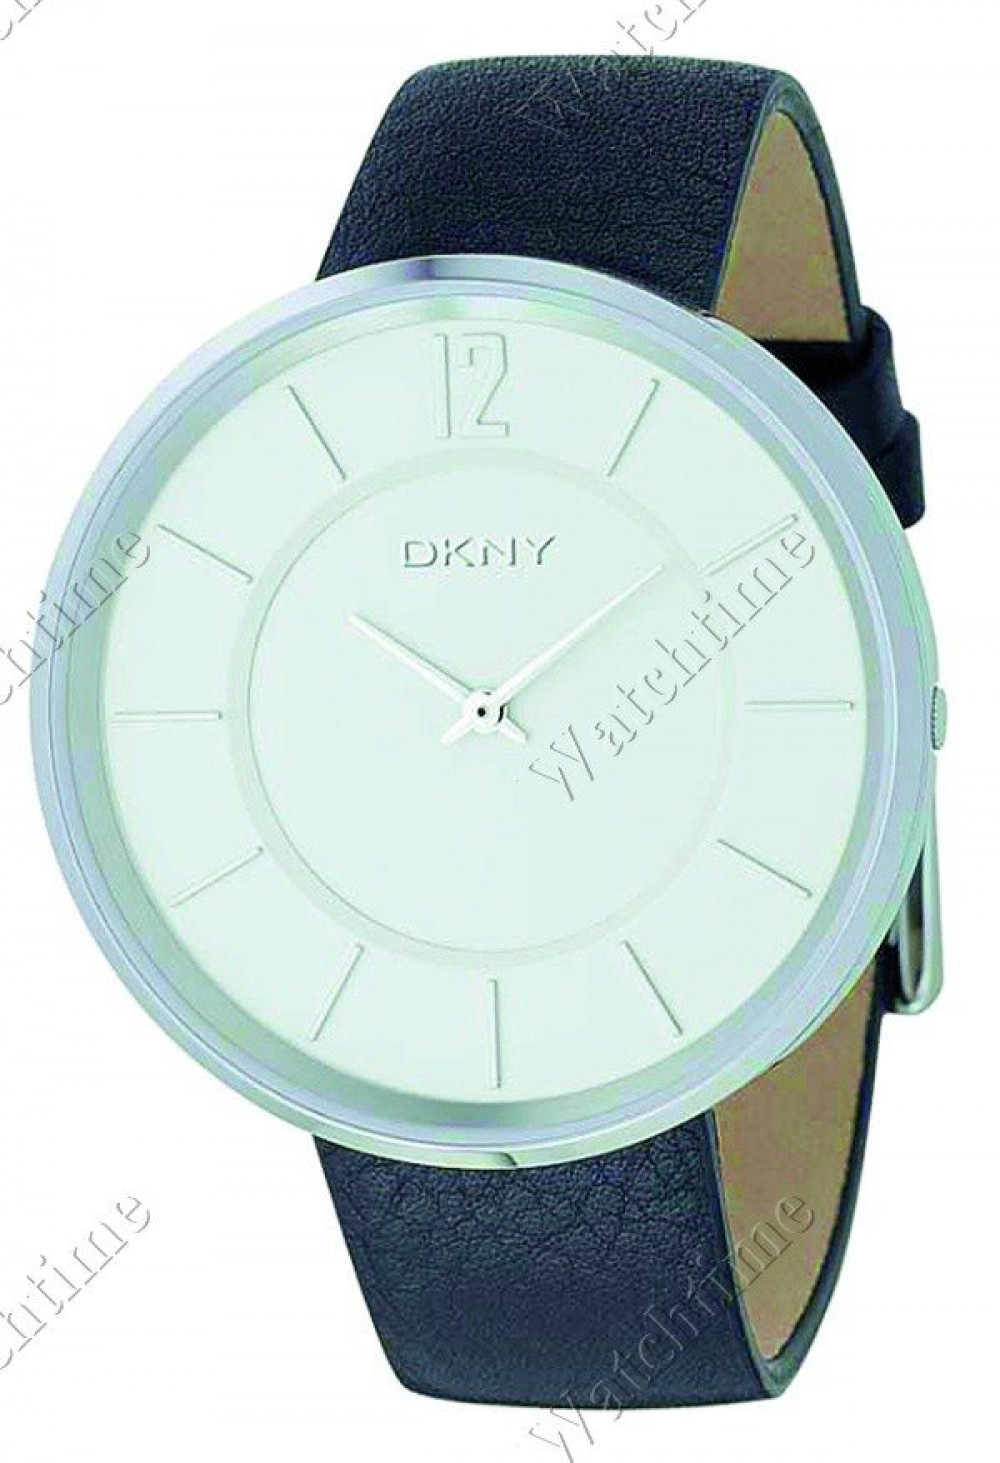 Zegarek firmy DKNY, model NY3933